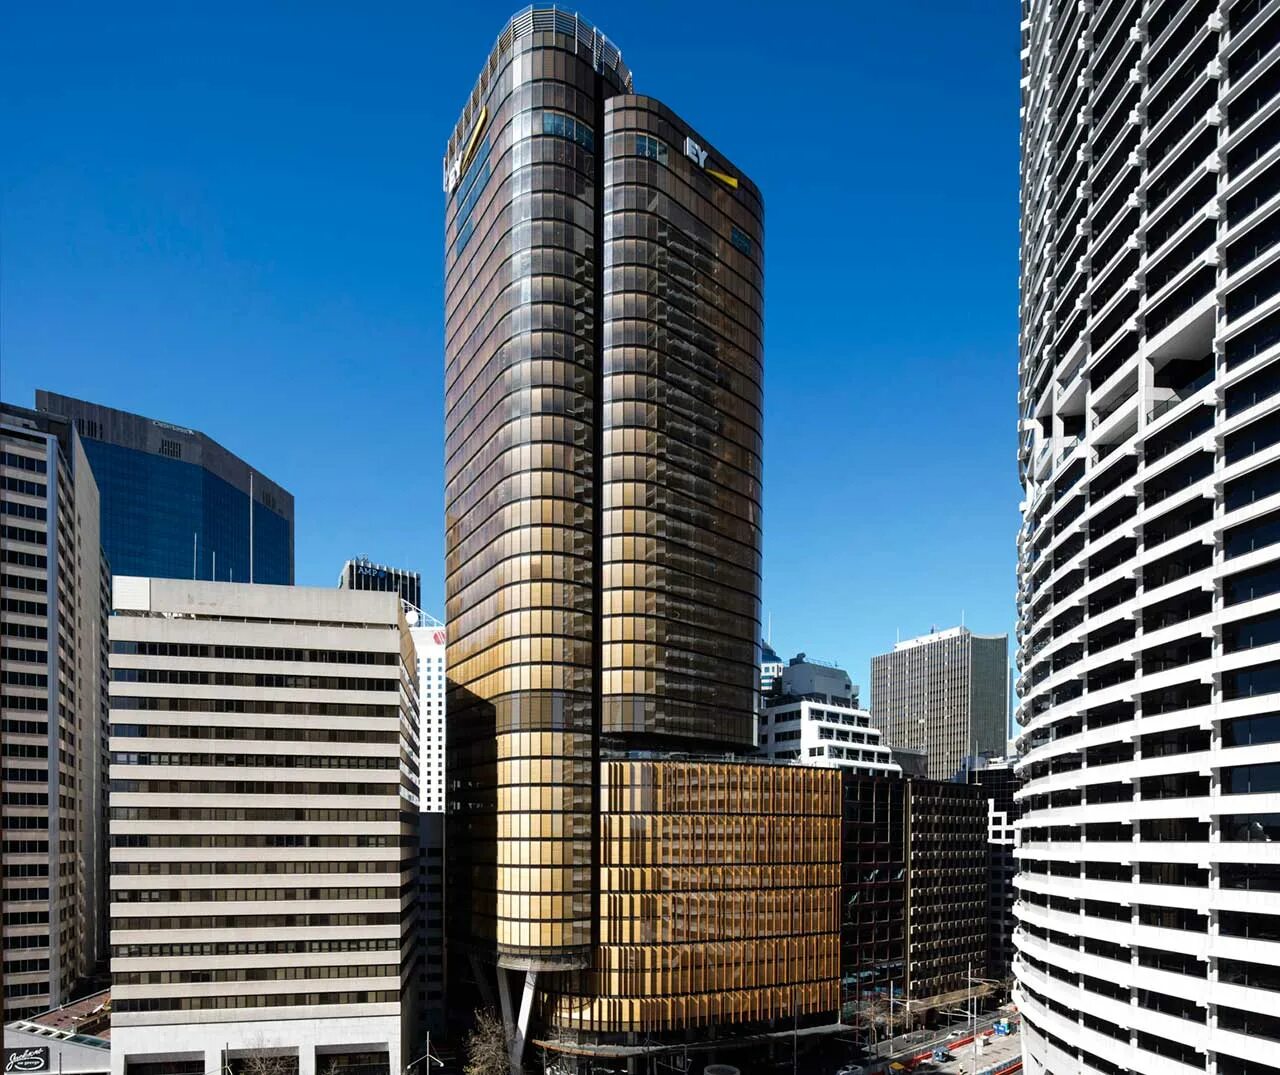 Building performance. Tall buildings. Tall skyscrapers in Sydney. ZR Performance здание. Санкорп Плейс здание в Сиднее.